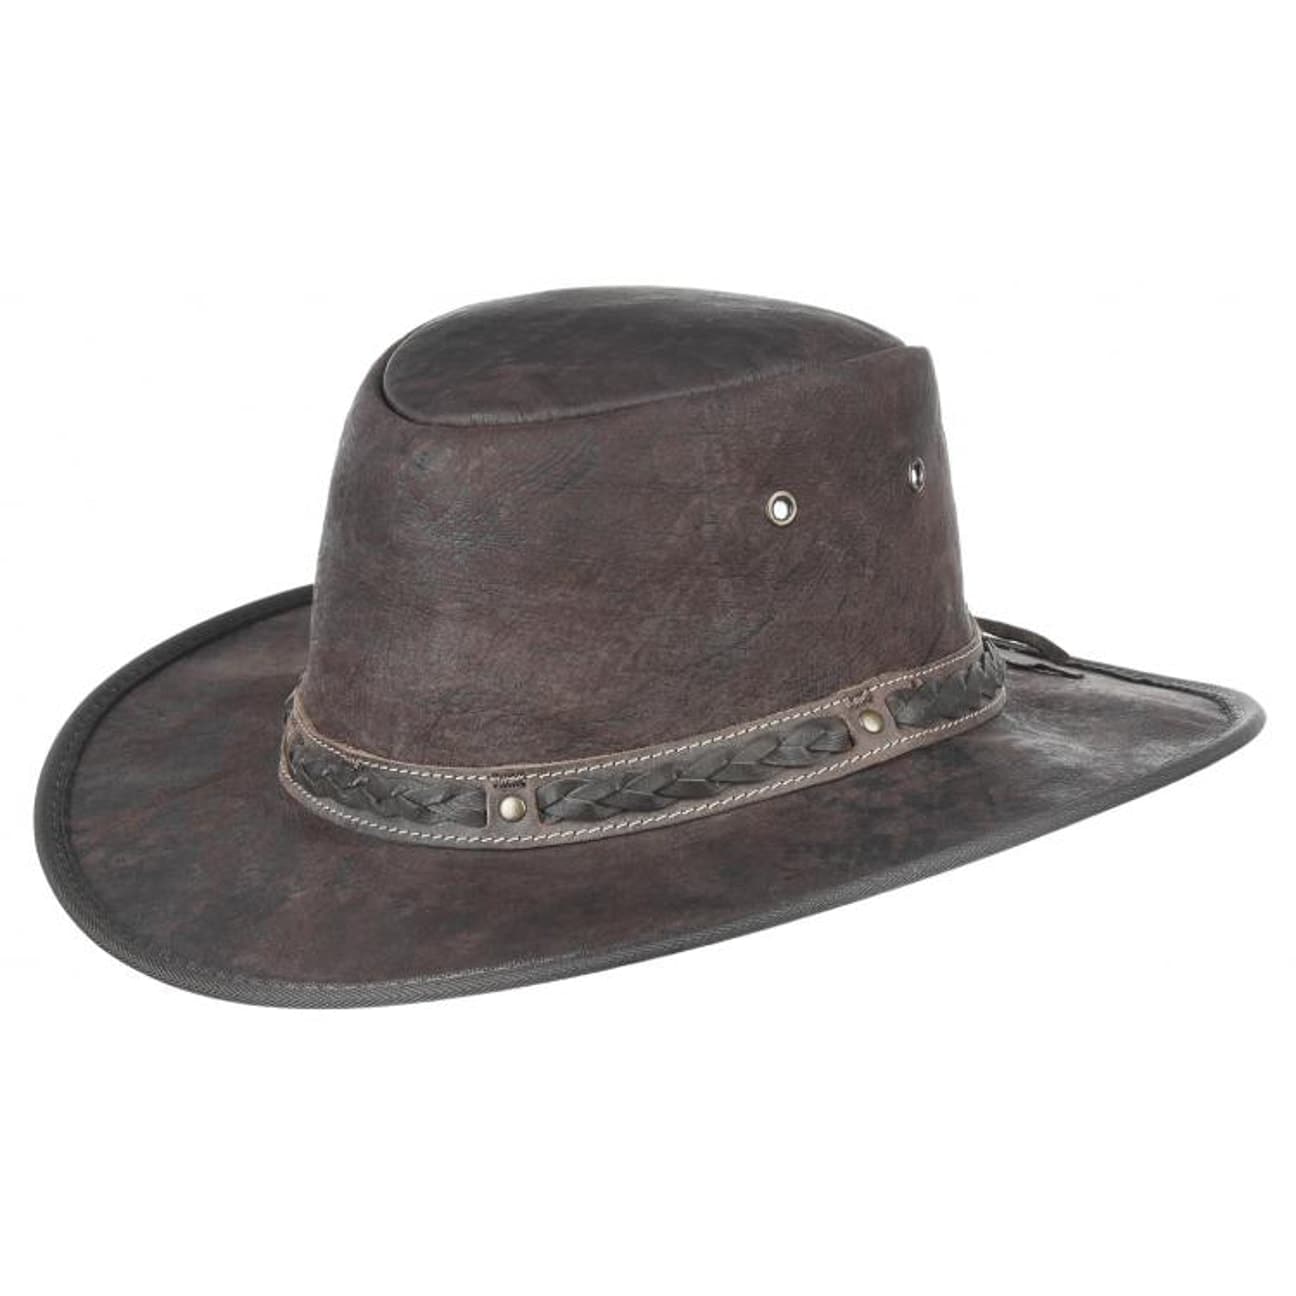 Kangaroo Sundowner Leather Hat by Scippis - 104,95